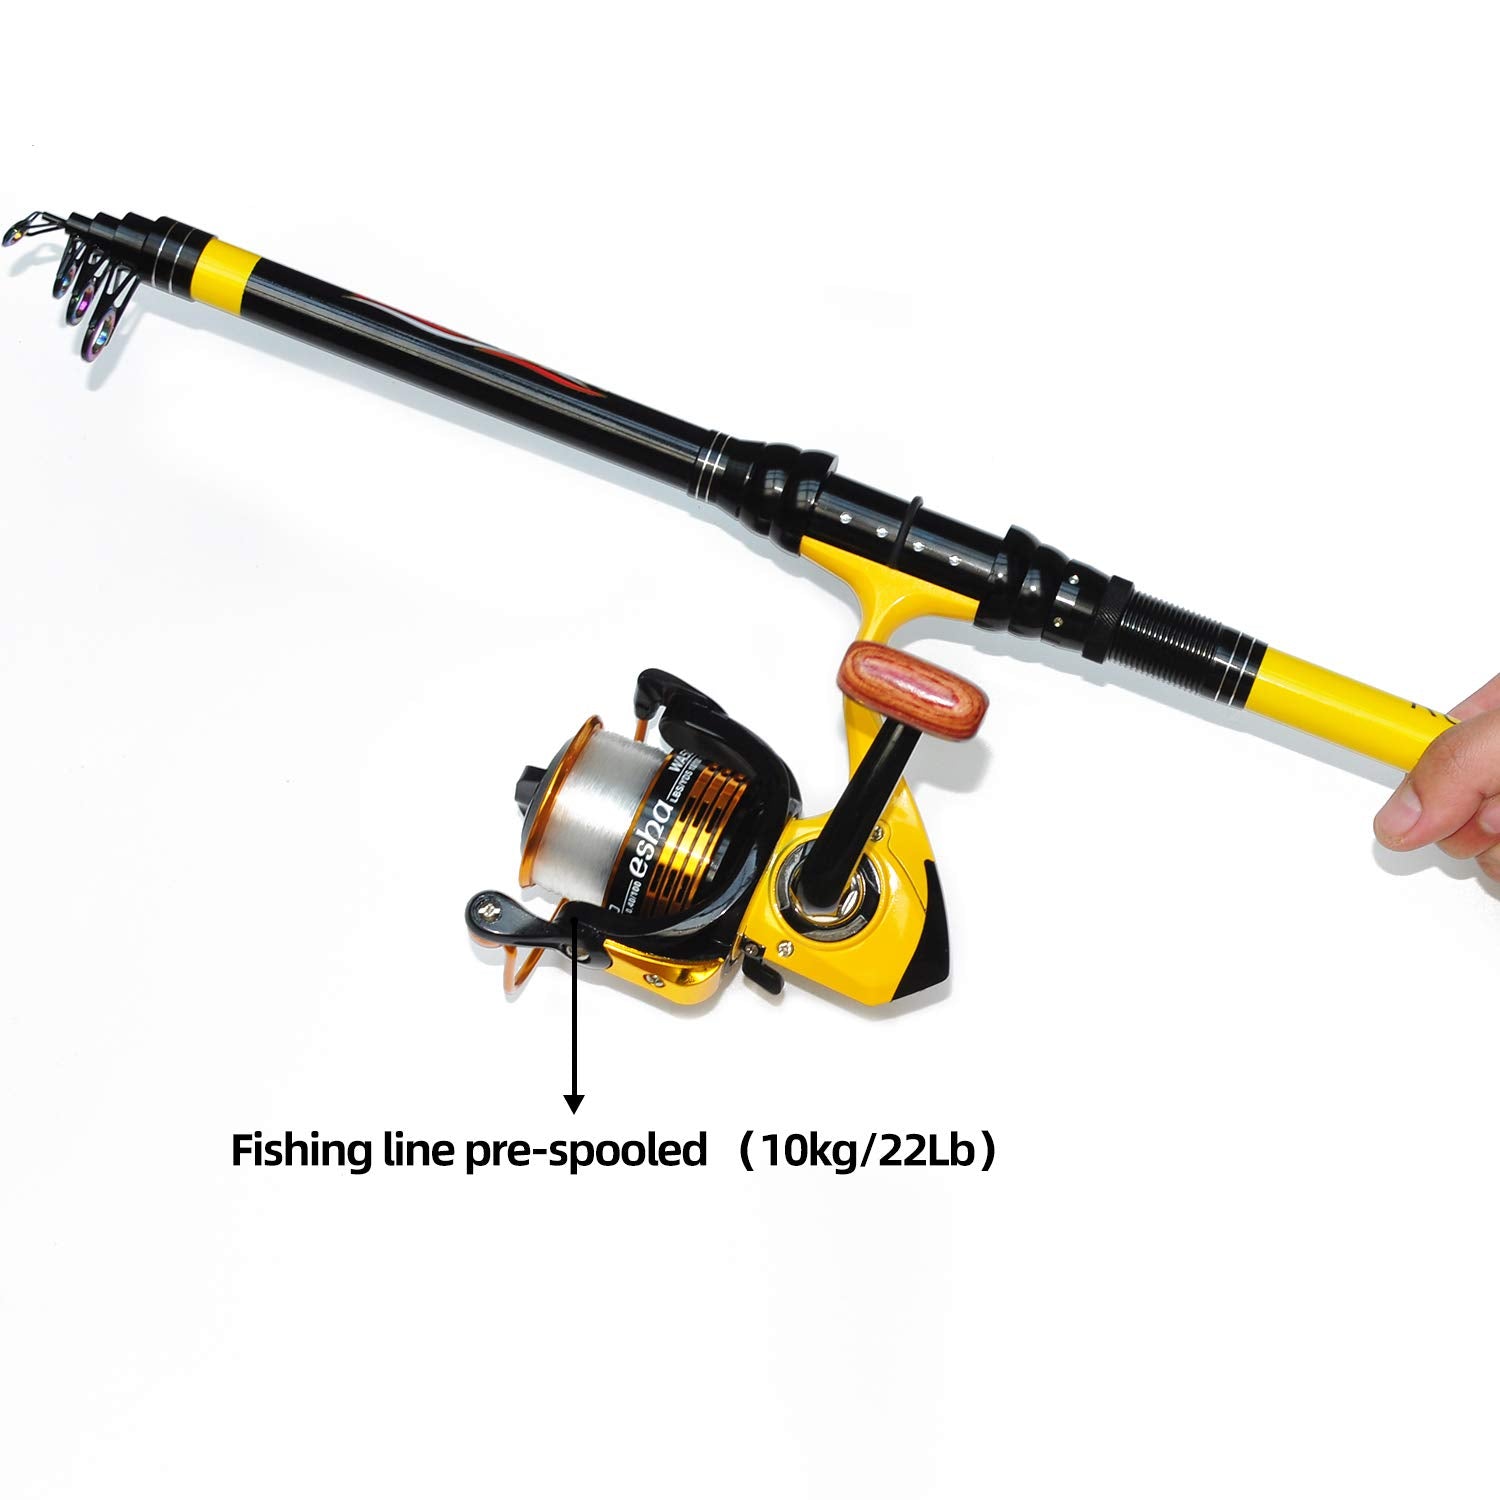 210 fishing pole rod and reel full set kit combo deal low price fishing rod  reel